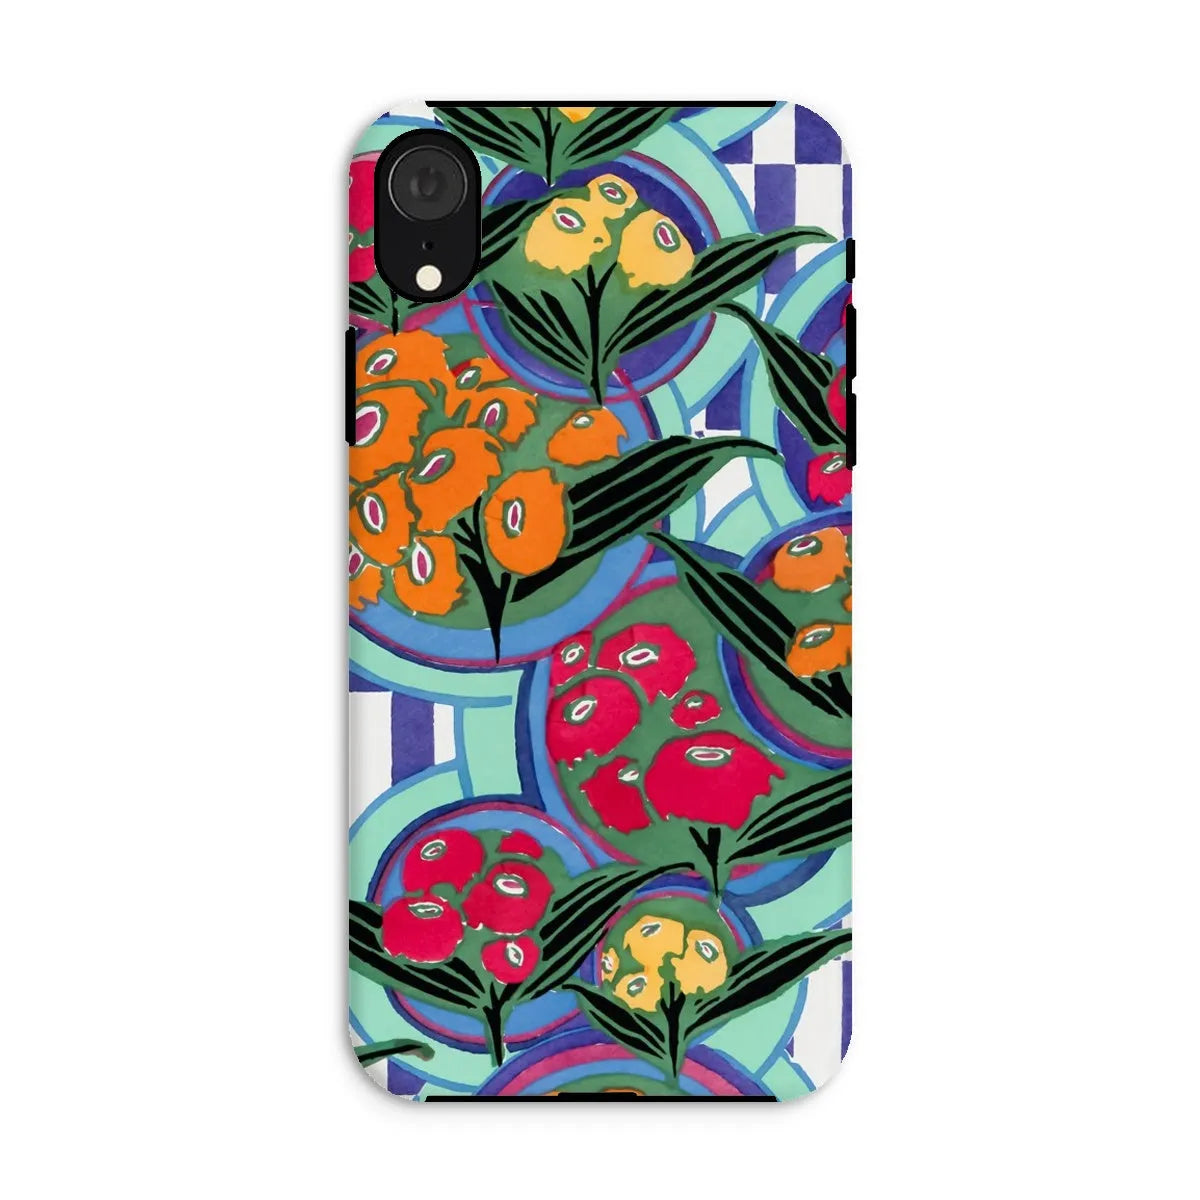 Vibrant Floral Aesthetic Art Phone Case - E.a. Séguy - Iphone Xr / Matte - Mobile Phone Cases - Aesthetic Art